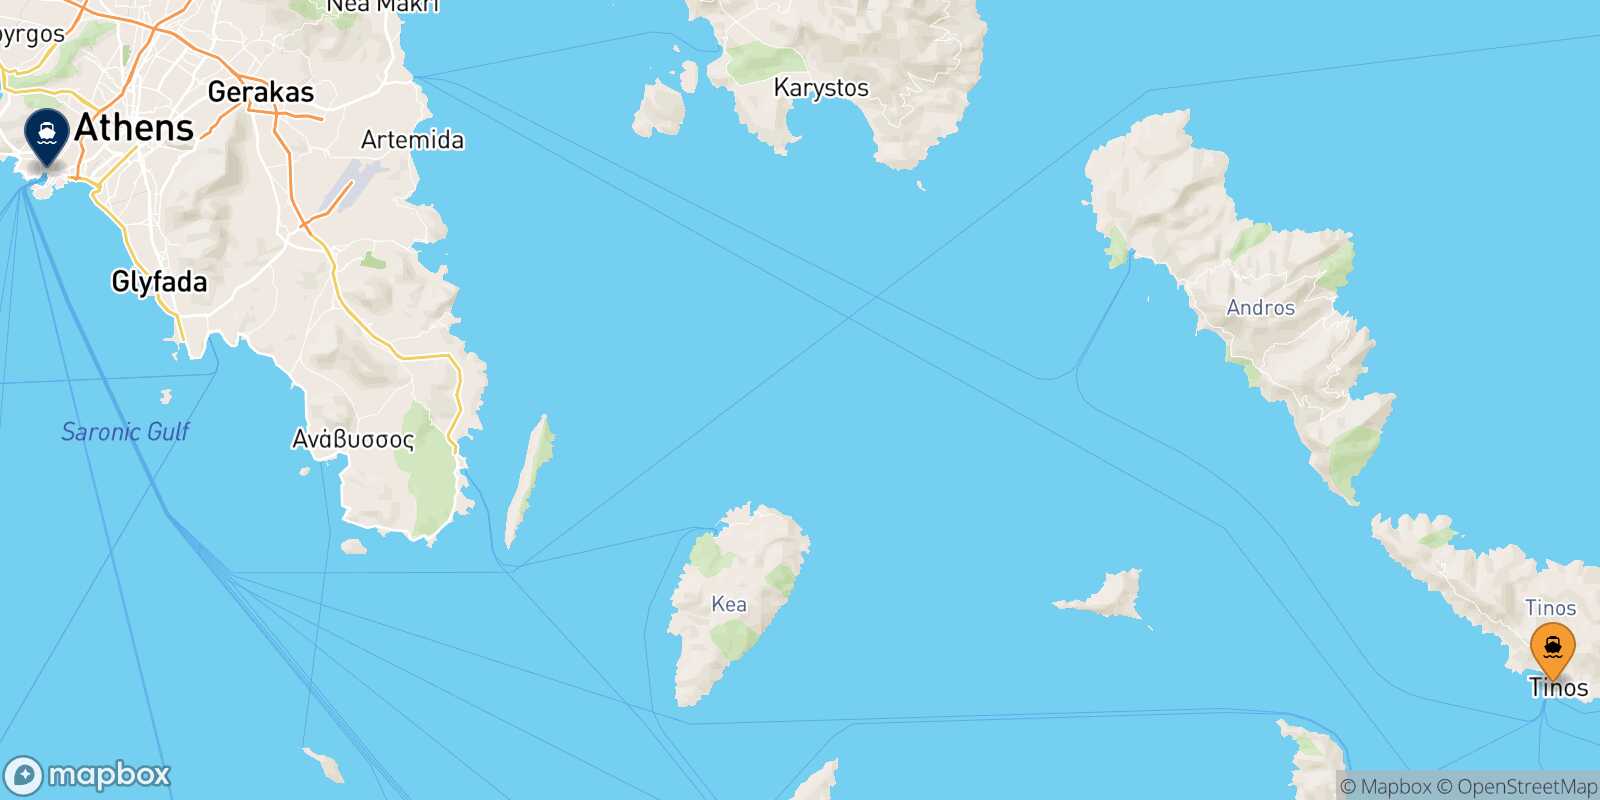 Tinos Piraeus route map